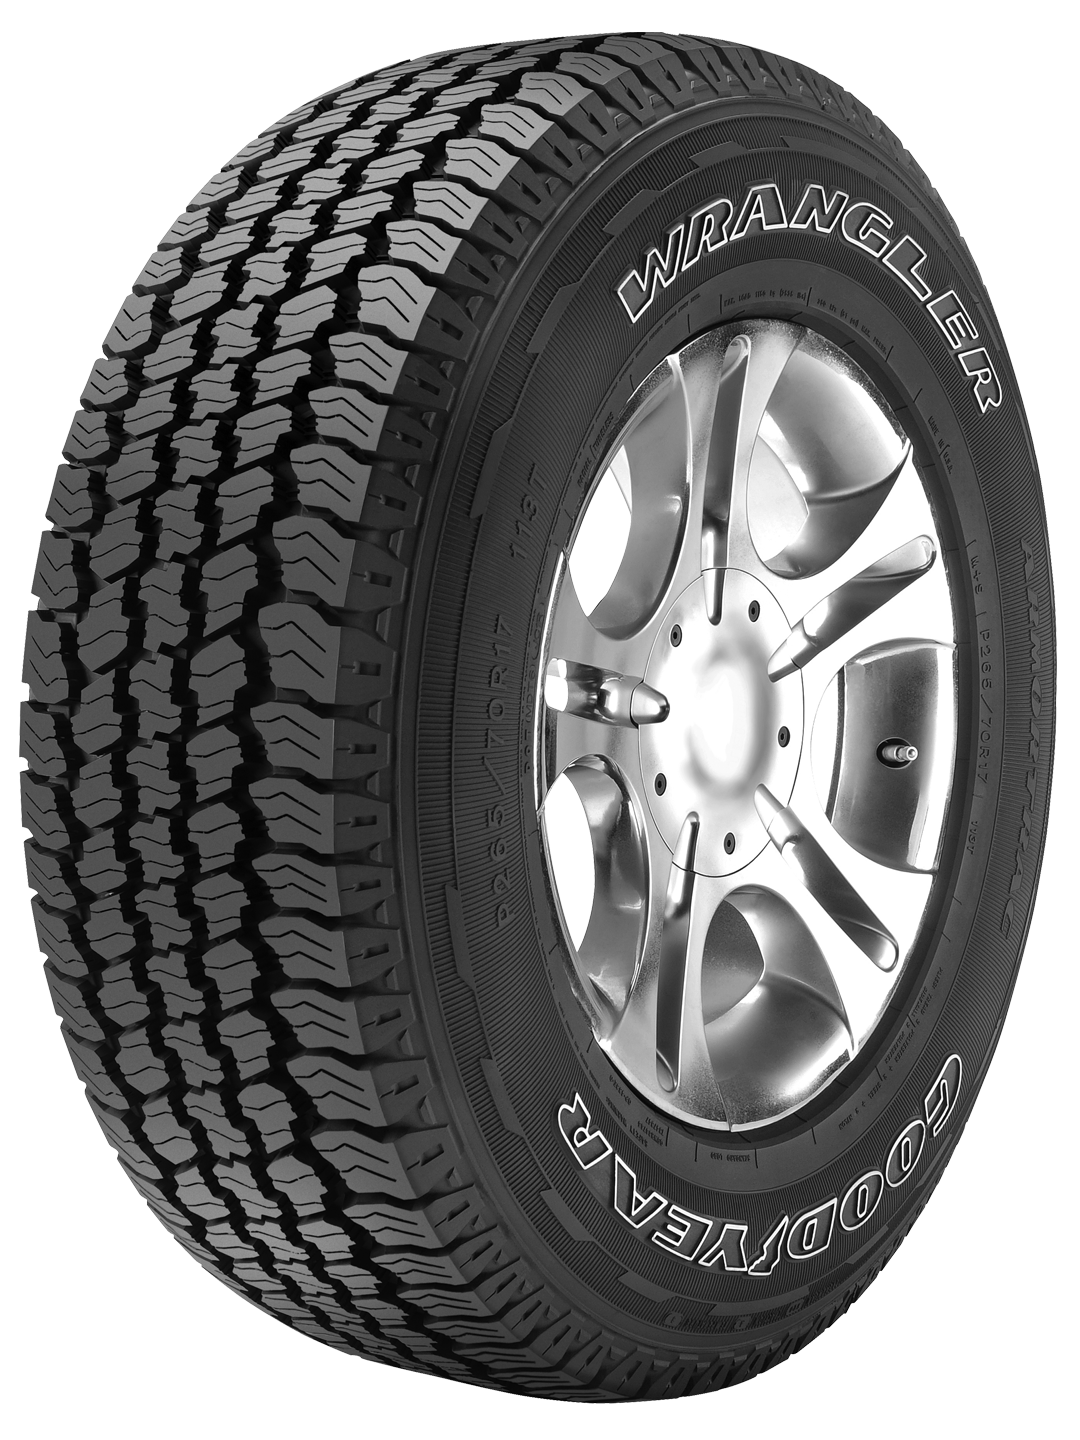 GOODYEAR WRGLR SILENT ARMOR  R 15LT - Appalacian Tire Products &  Service Appalacian Tire Products & Service